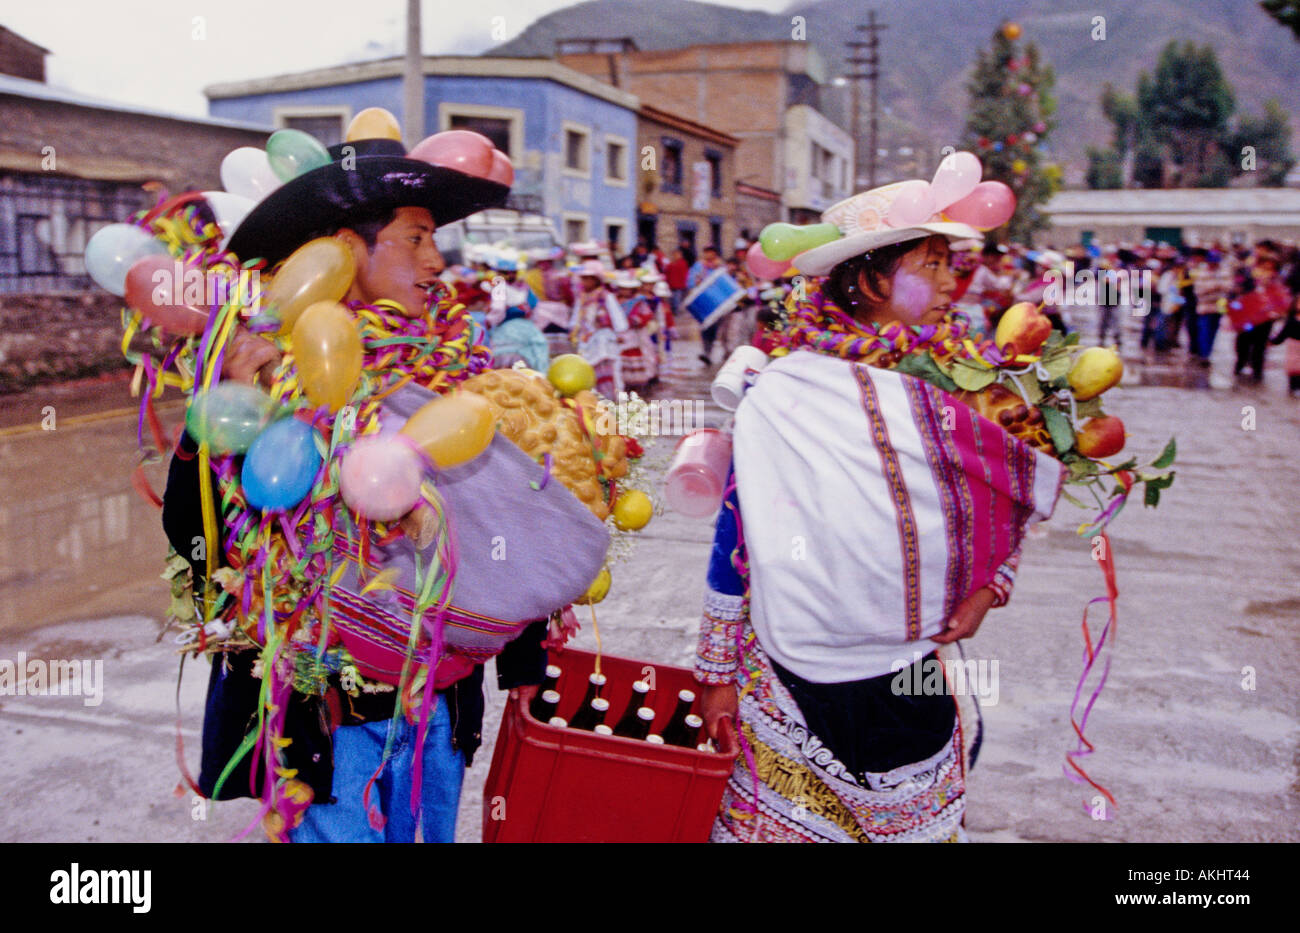 Dancing revelry and music February carnivale celebration Chivay Peru Stock Photo